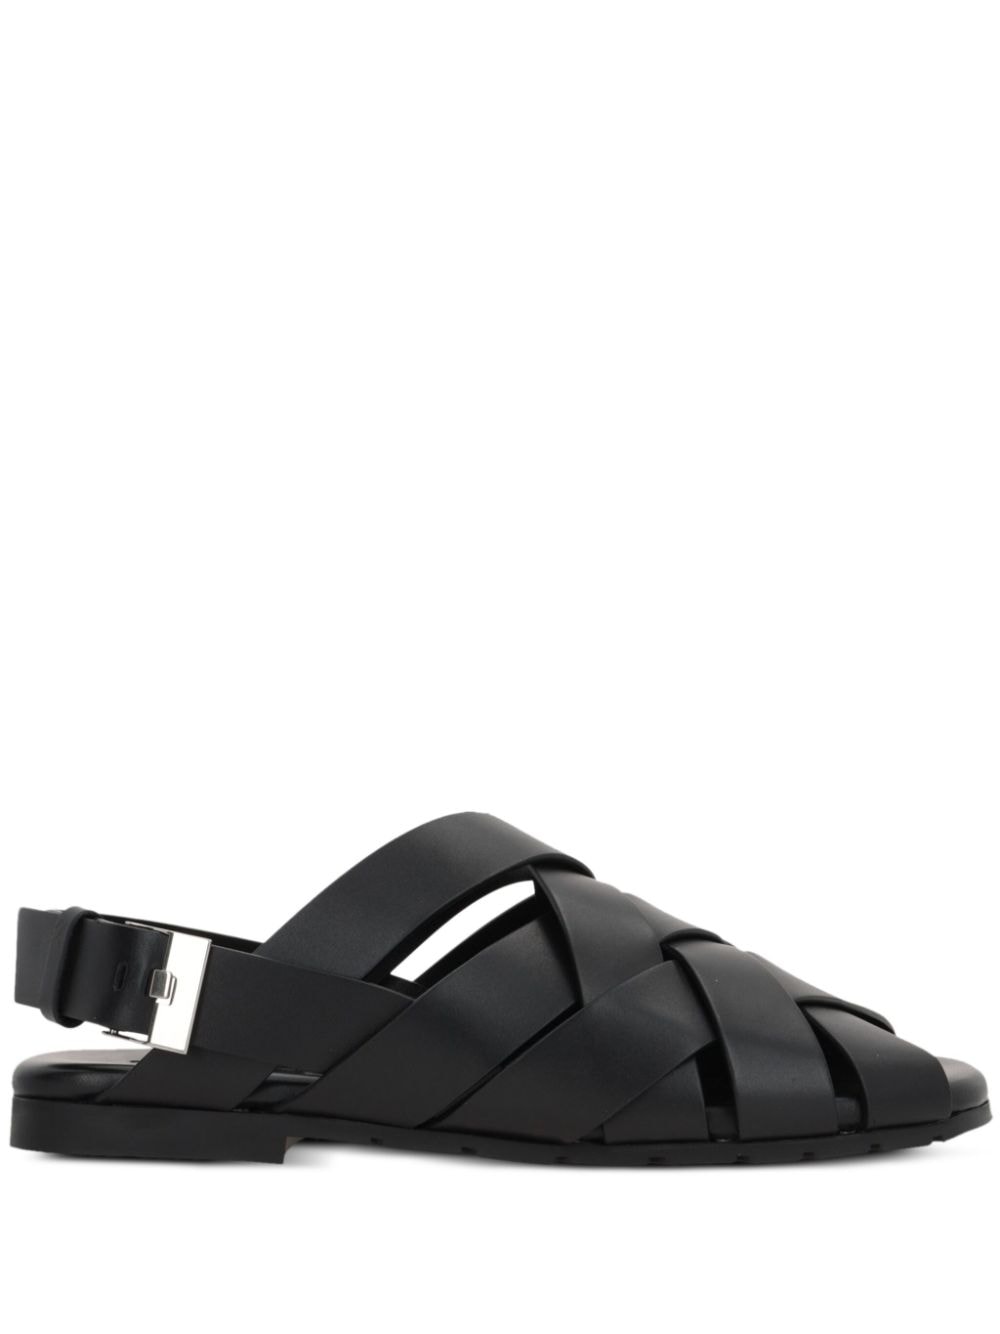 Bottega Veneta Alfie leather sandals - Black von Bottega Veneta